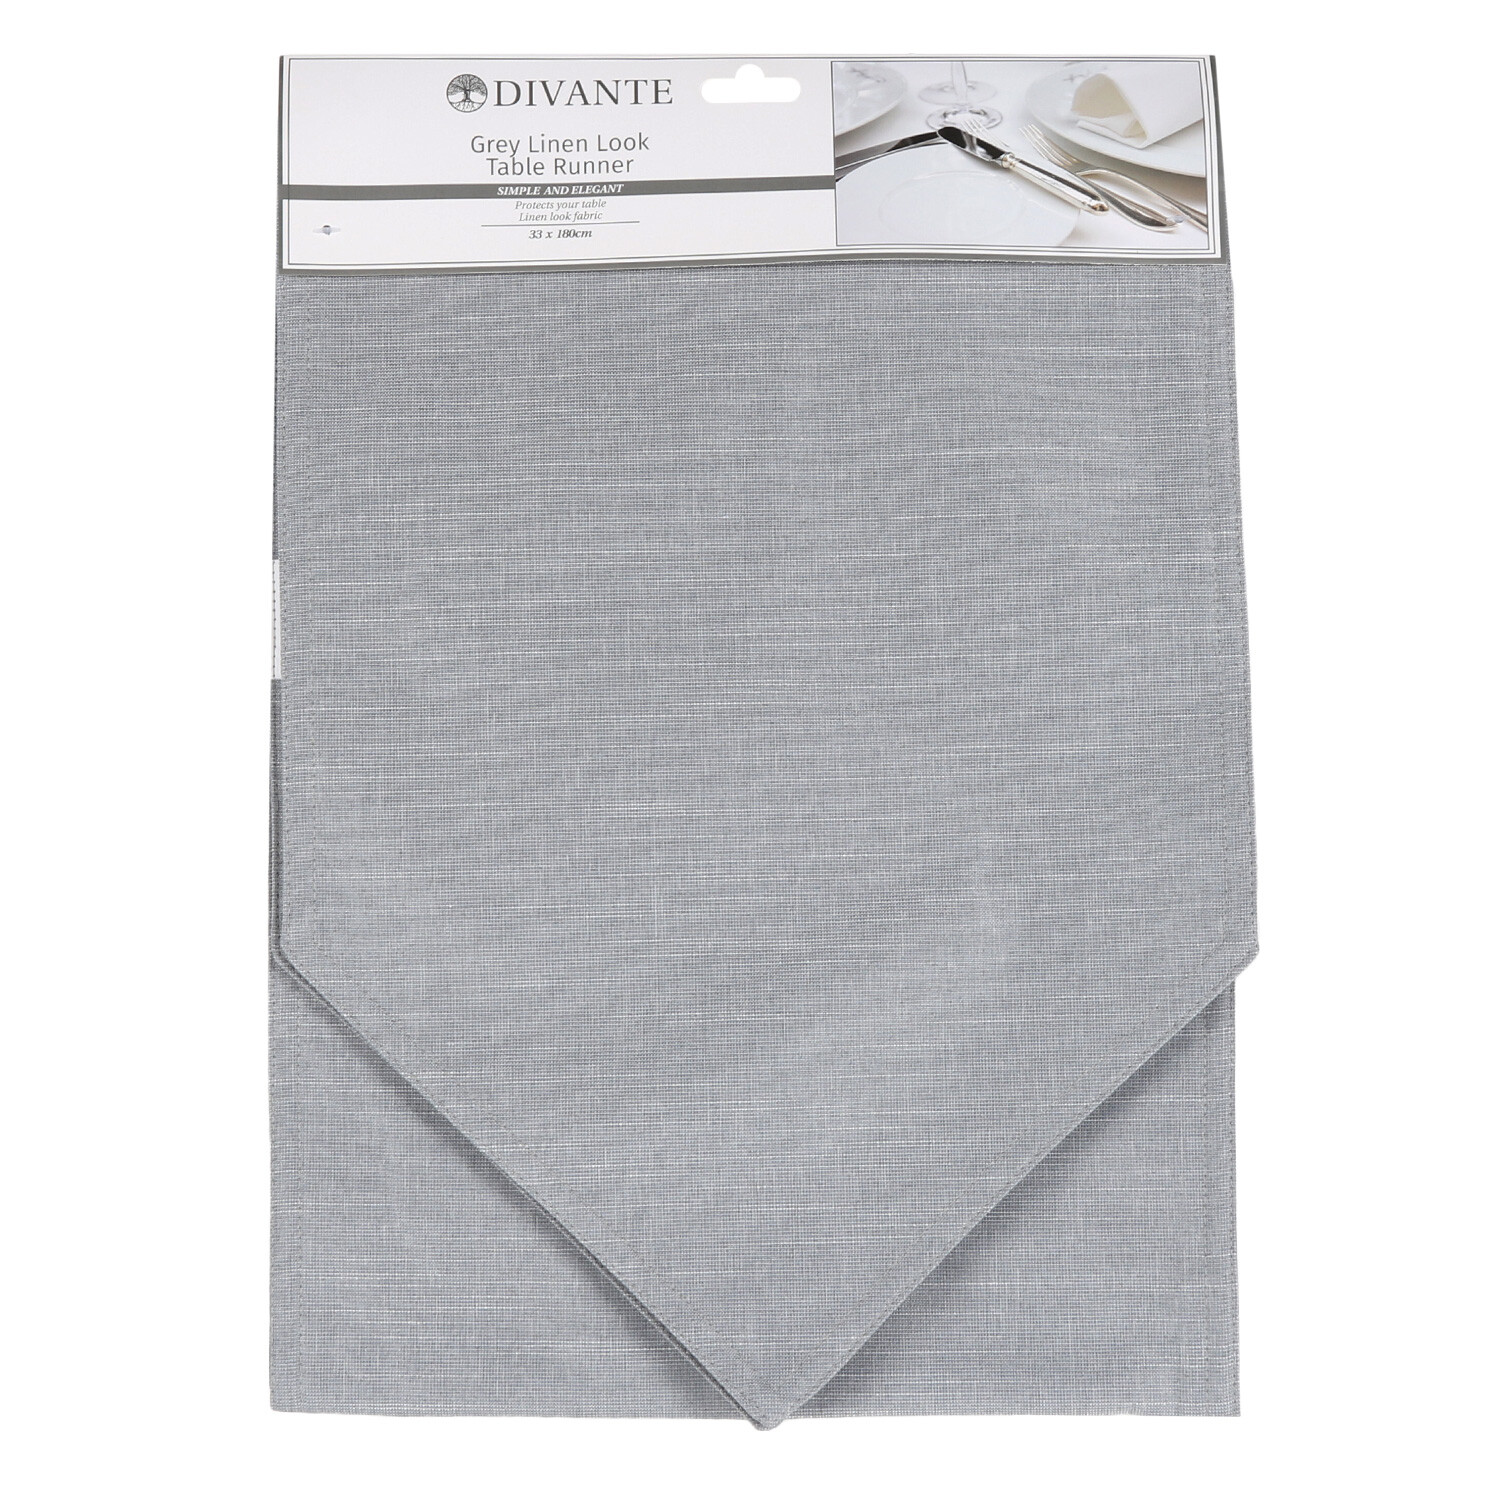 Divante Grey Linen Look Table Runner 183 x 33cm Image 1